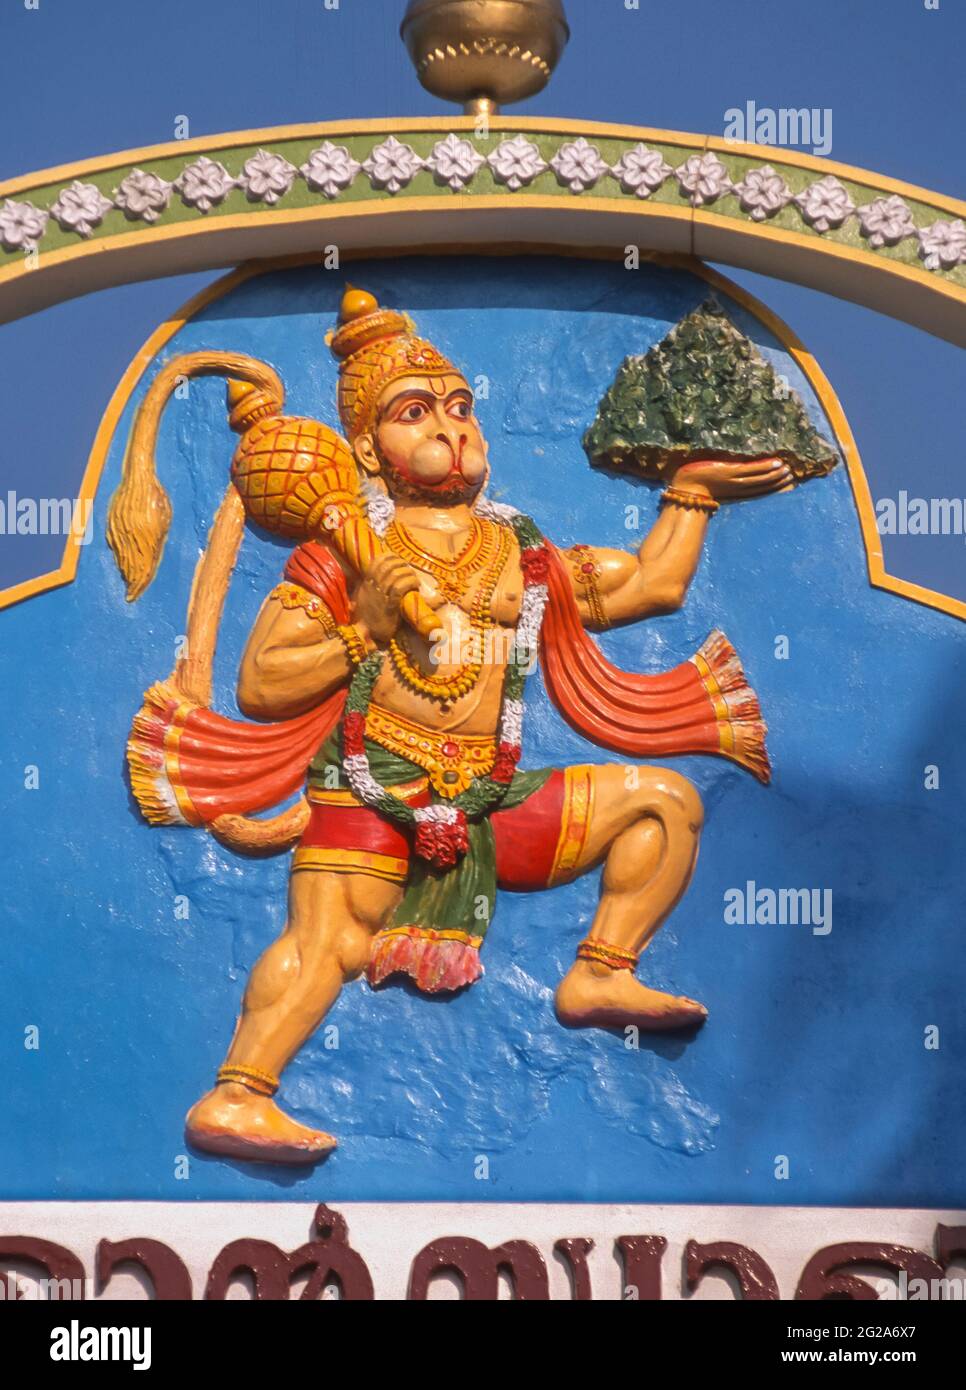 KERALA, INDIA - Depiction of Hindu god Hanuman over door of temple. He lifts herb-bearing mountain as show of strength. Stock Photo